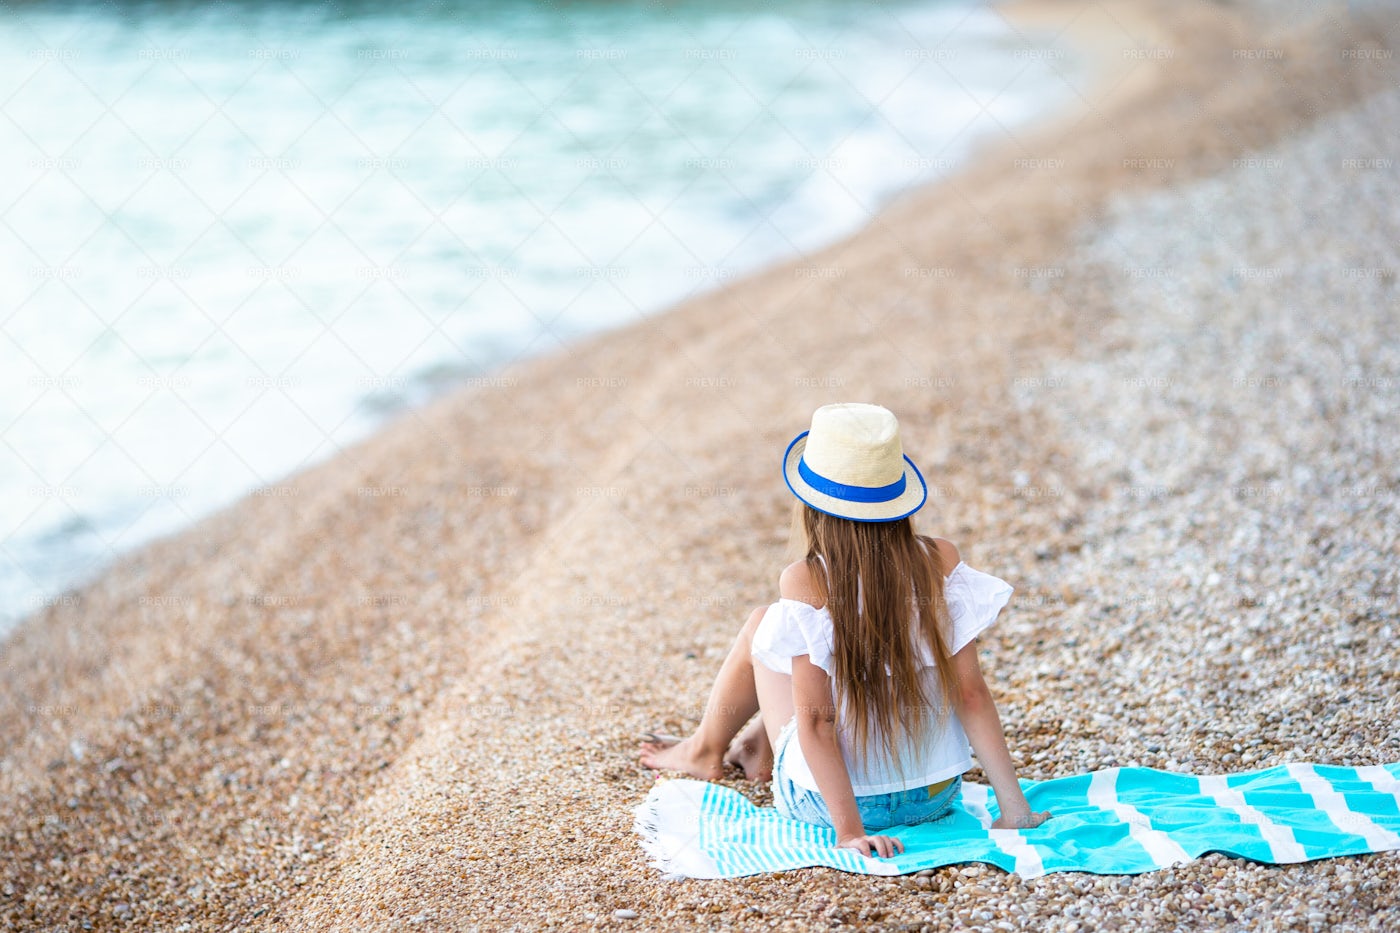 Child Sitting On Beach Towel: Stock Photos